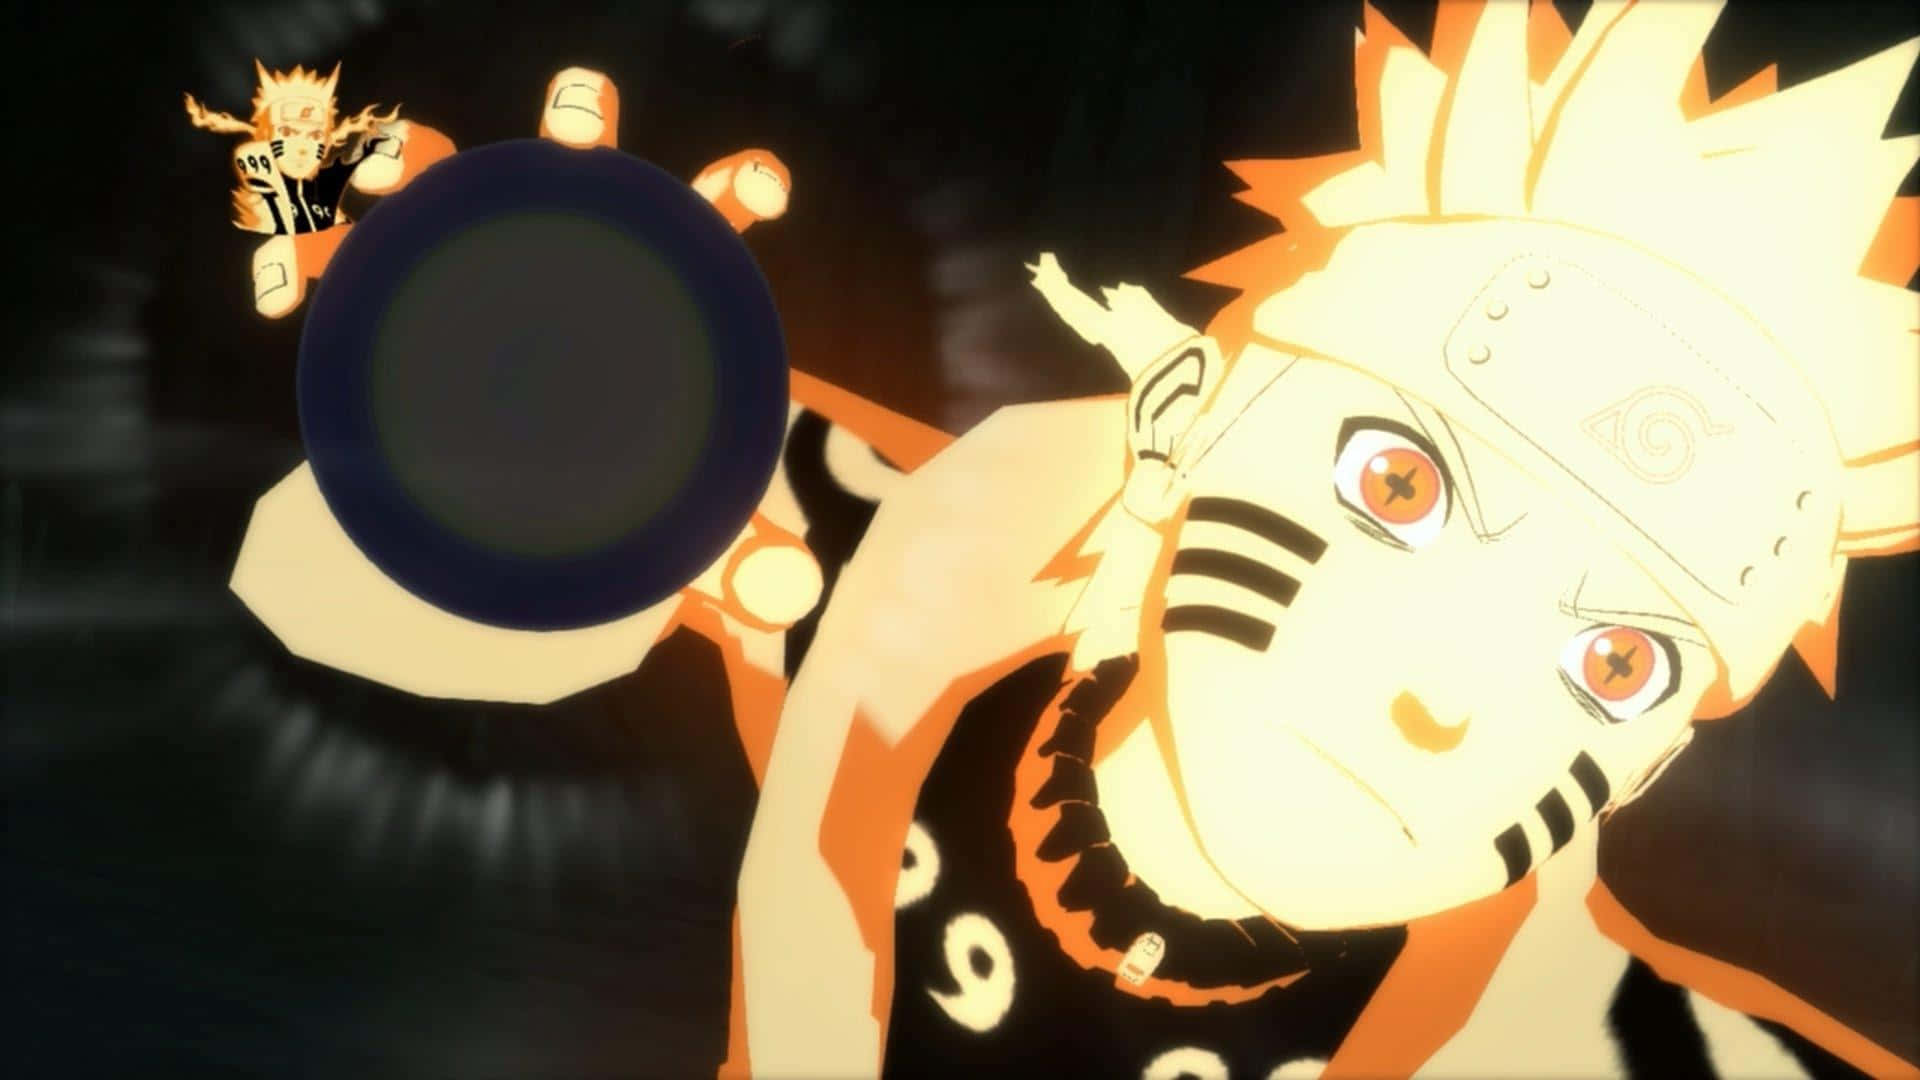 Naruto Uzumaki in his powerful Sage Mode, ready for battle| Wallpaper